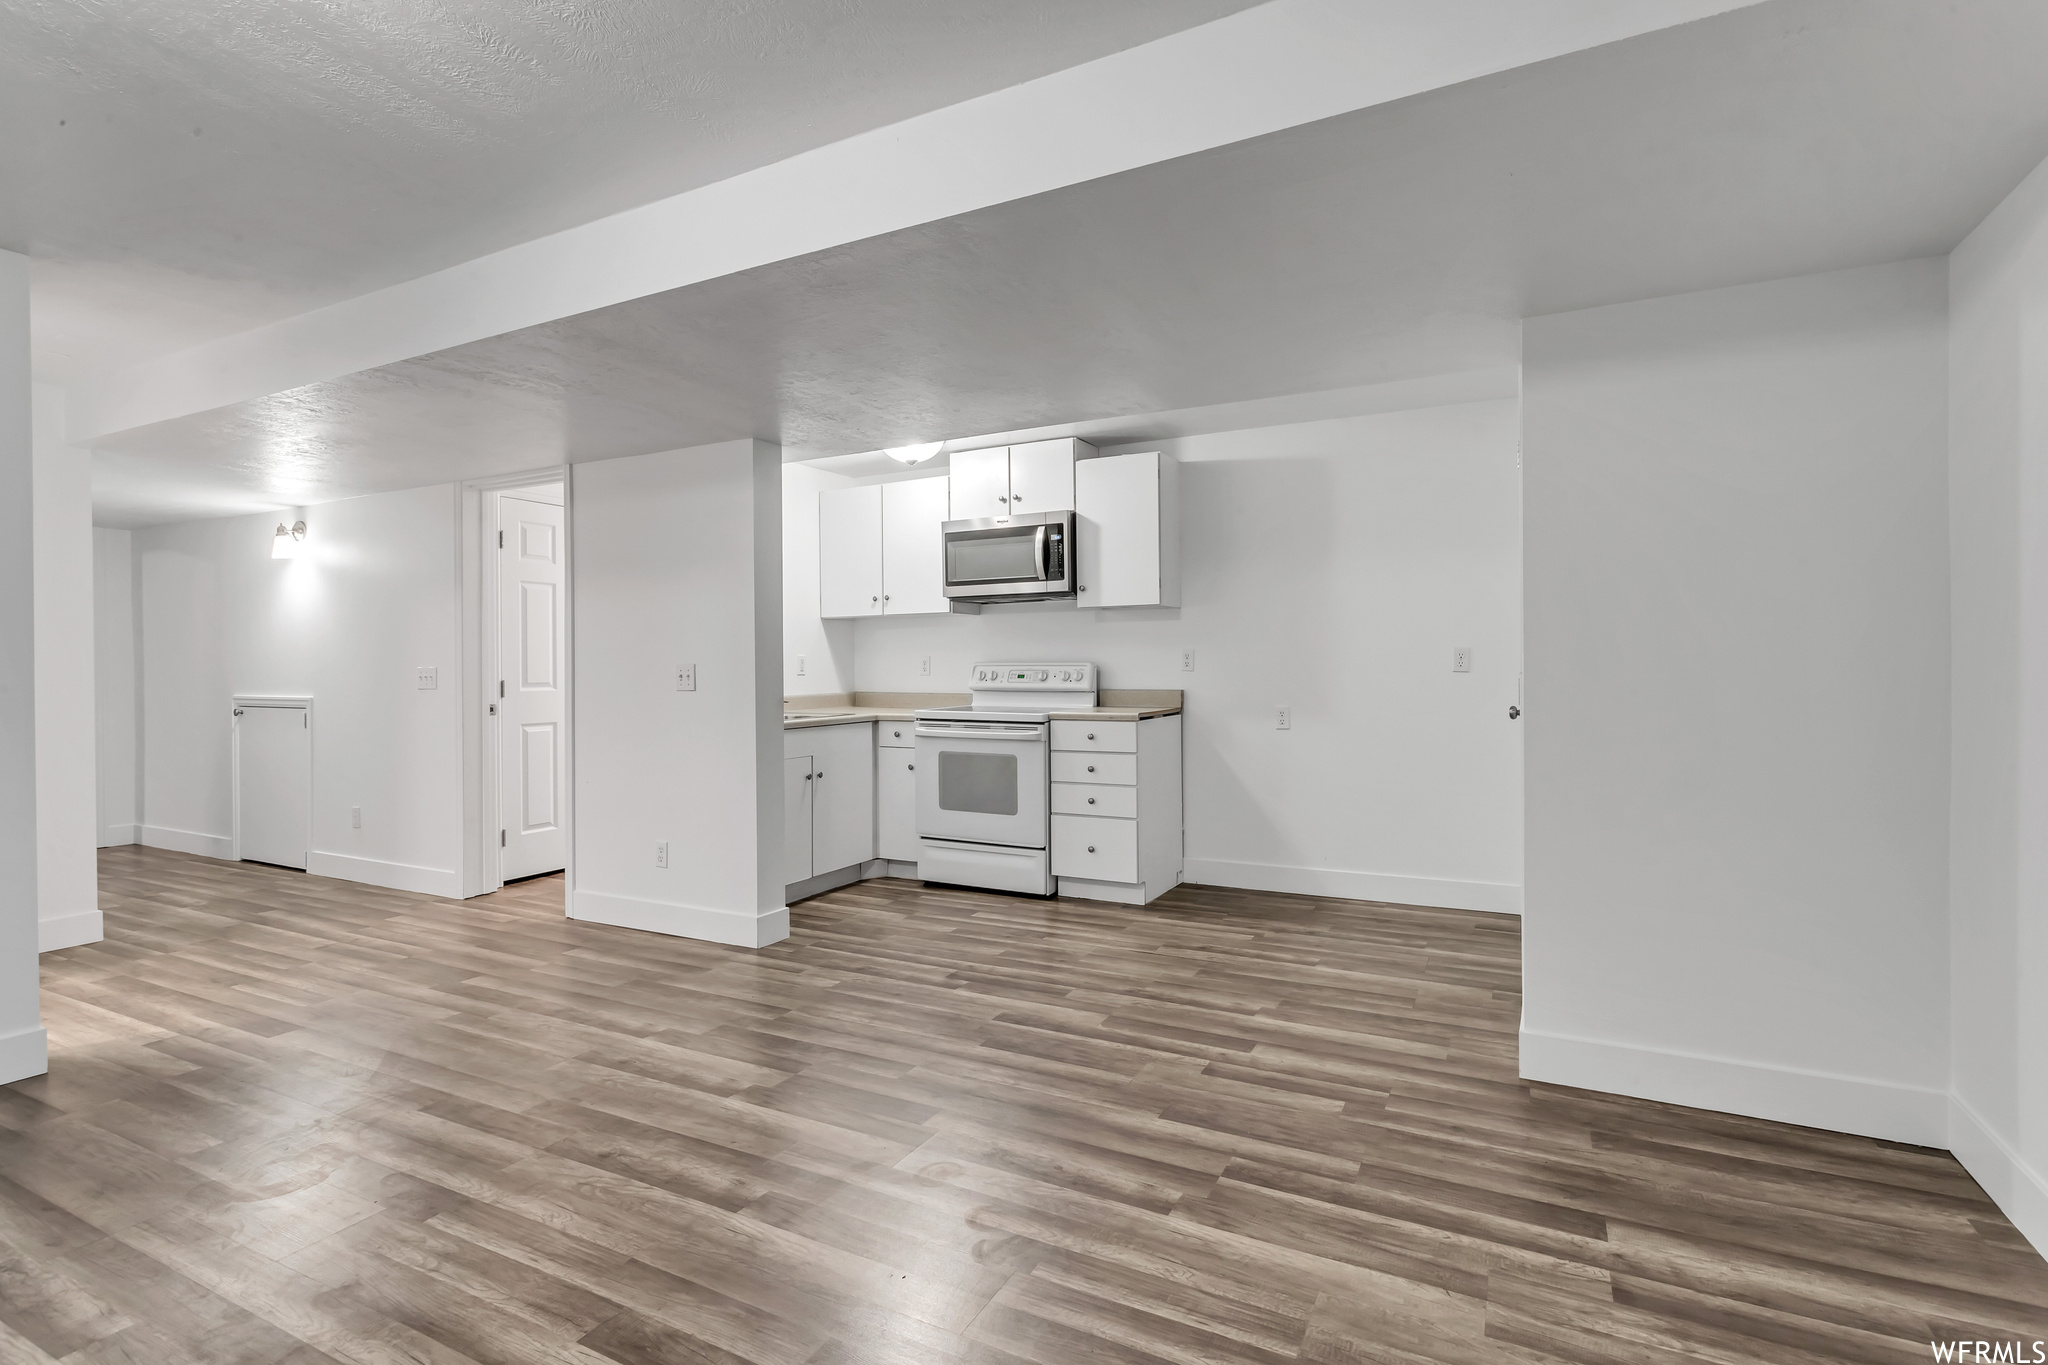 Kitchen with white range, light hardwood floors, white cabinetry, and light countertops